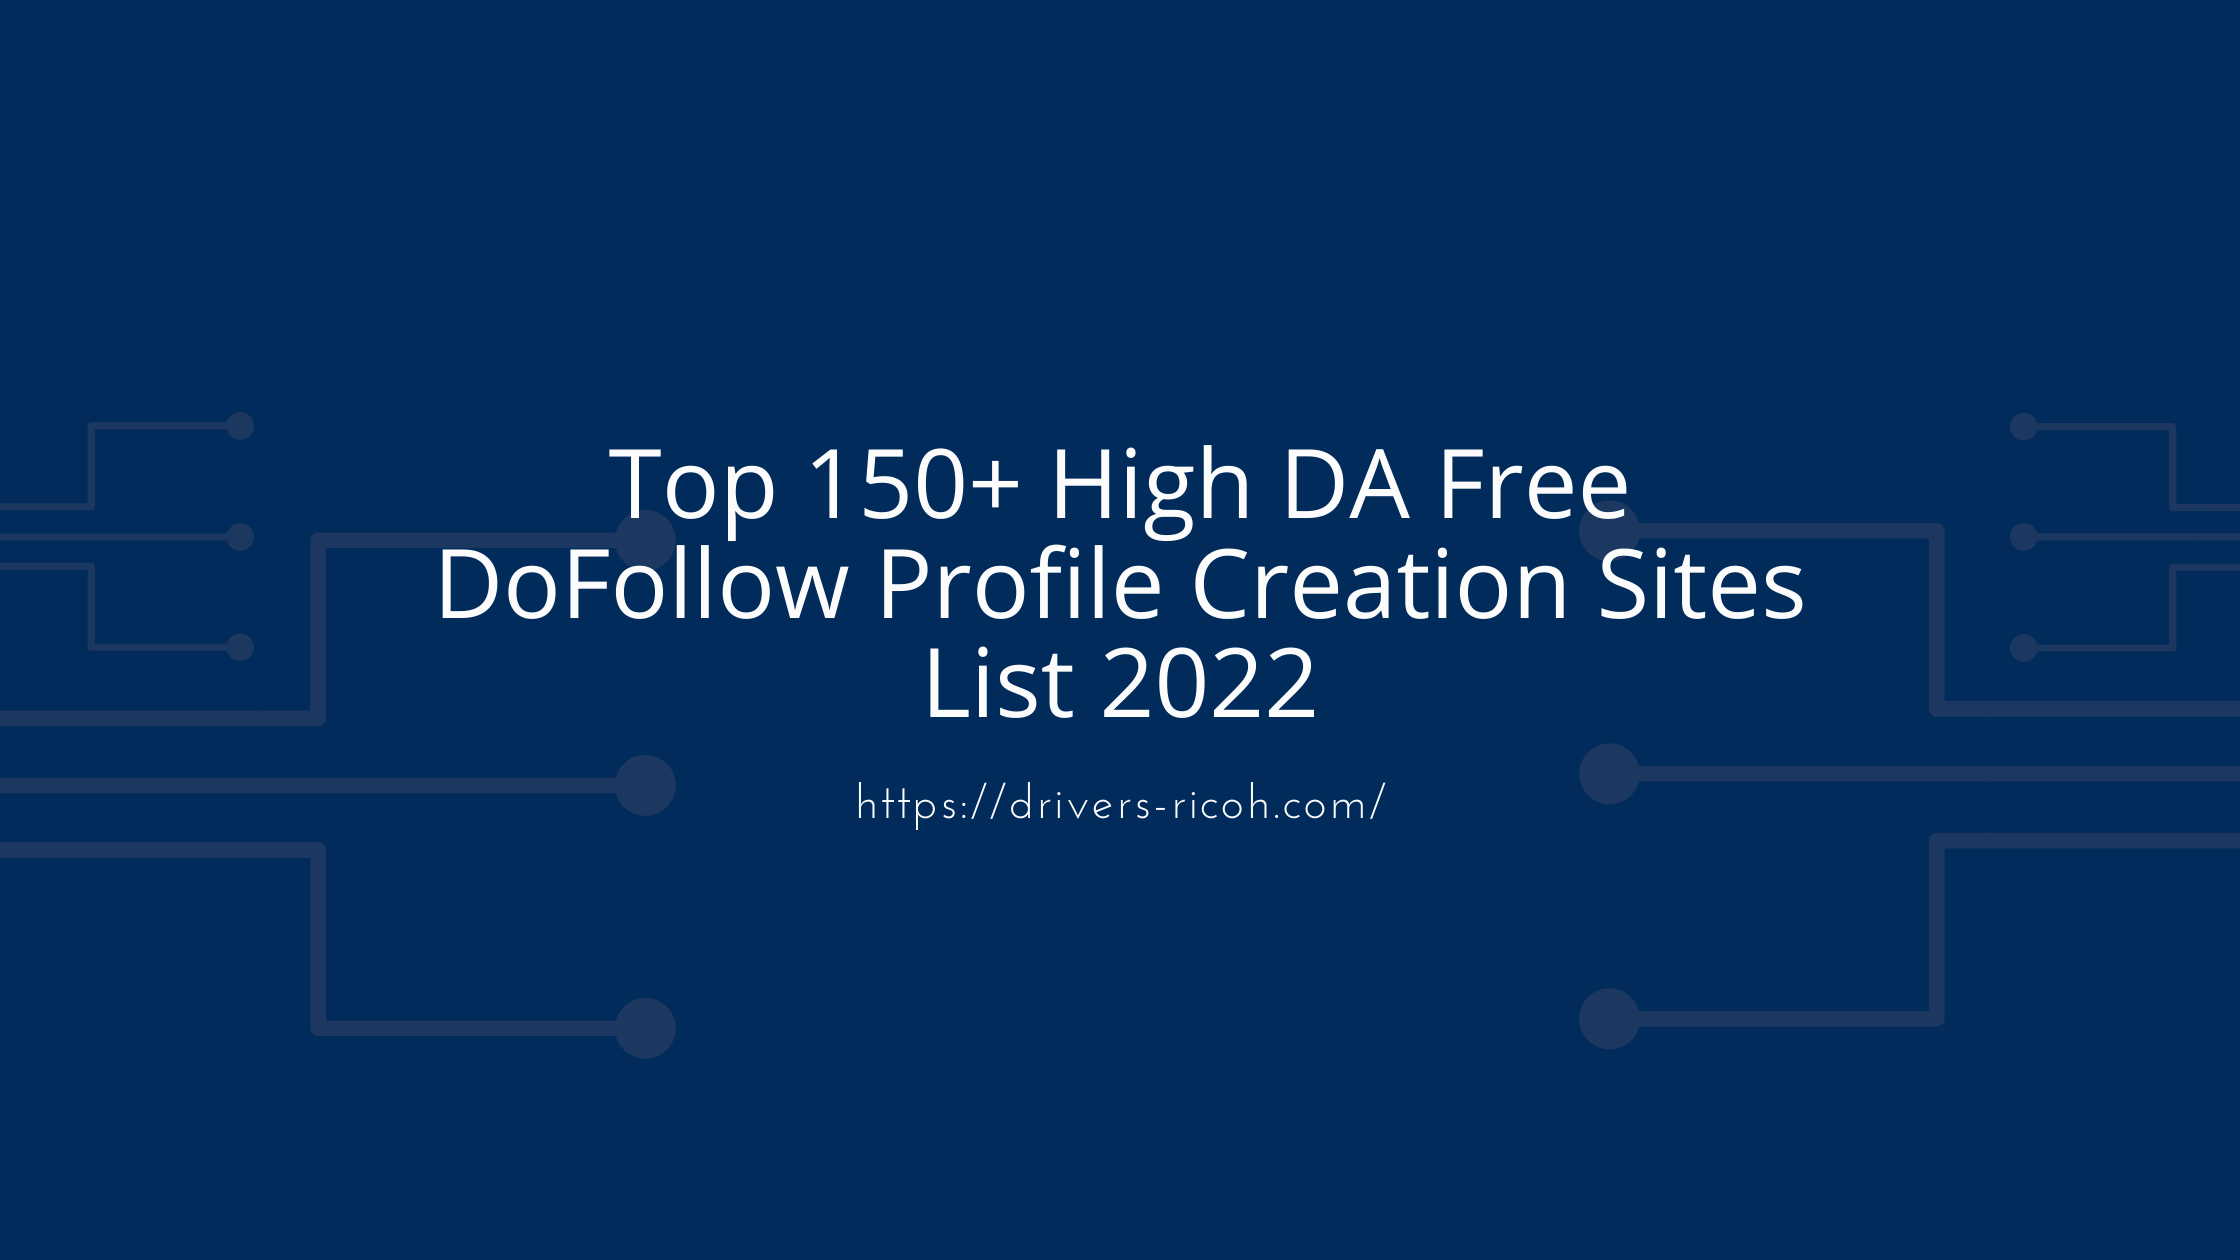 Top 150+ High DA Free DoFollow Profile Creation Sites List 2022